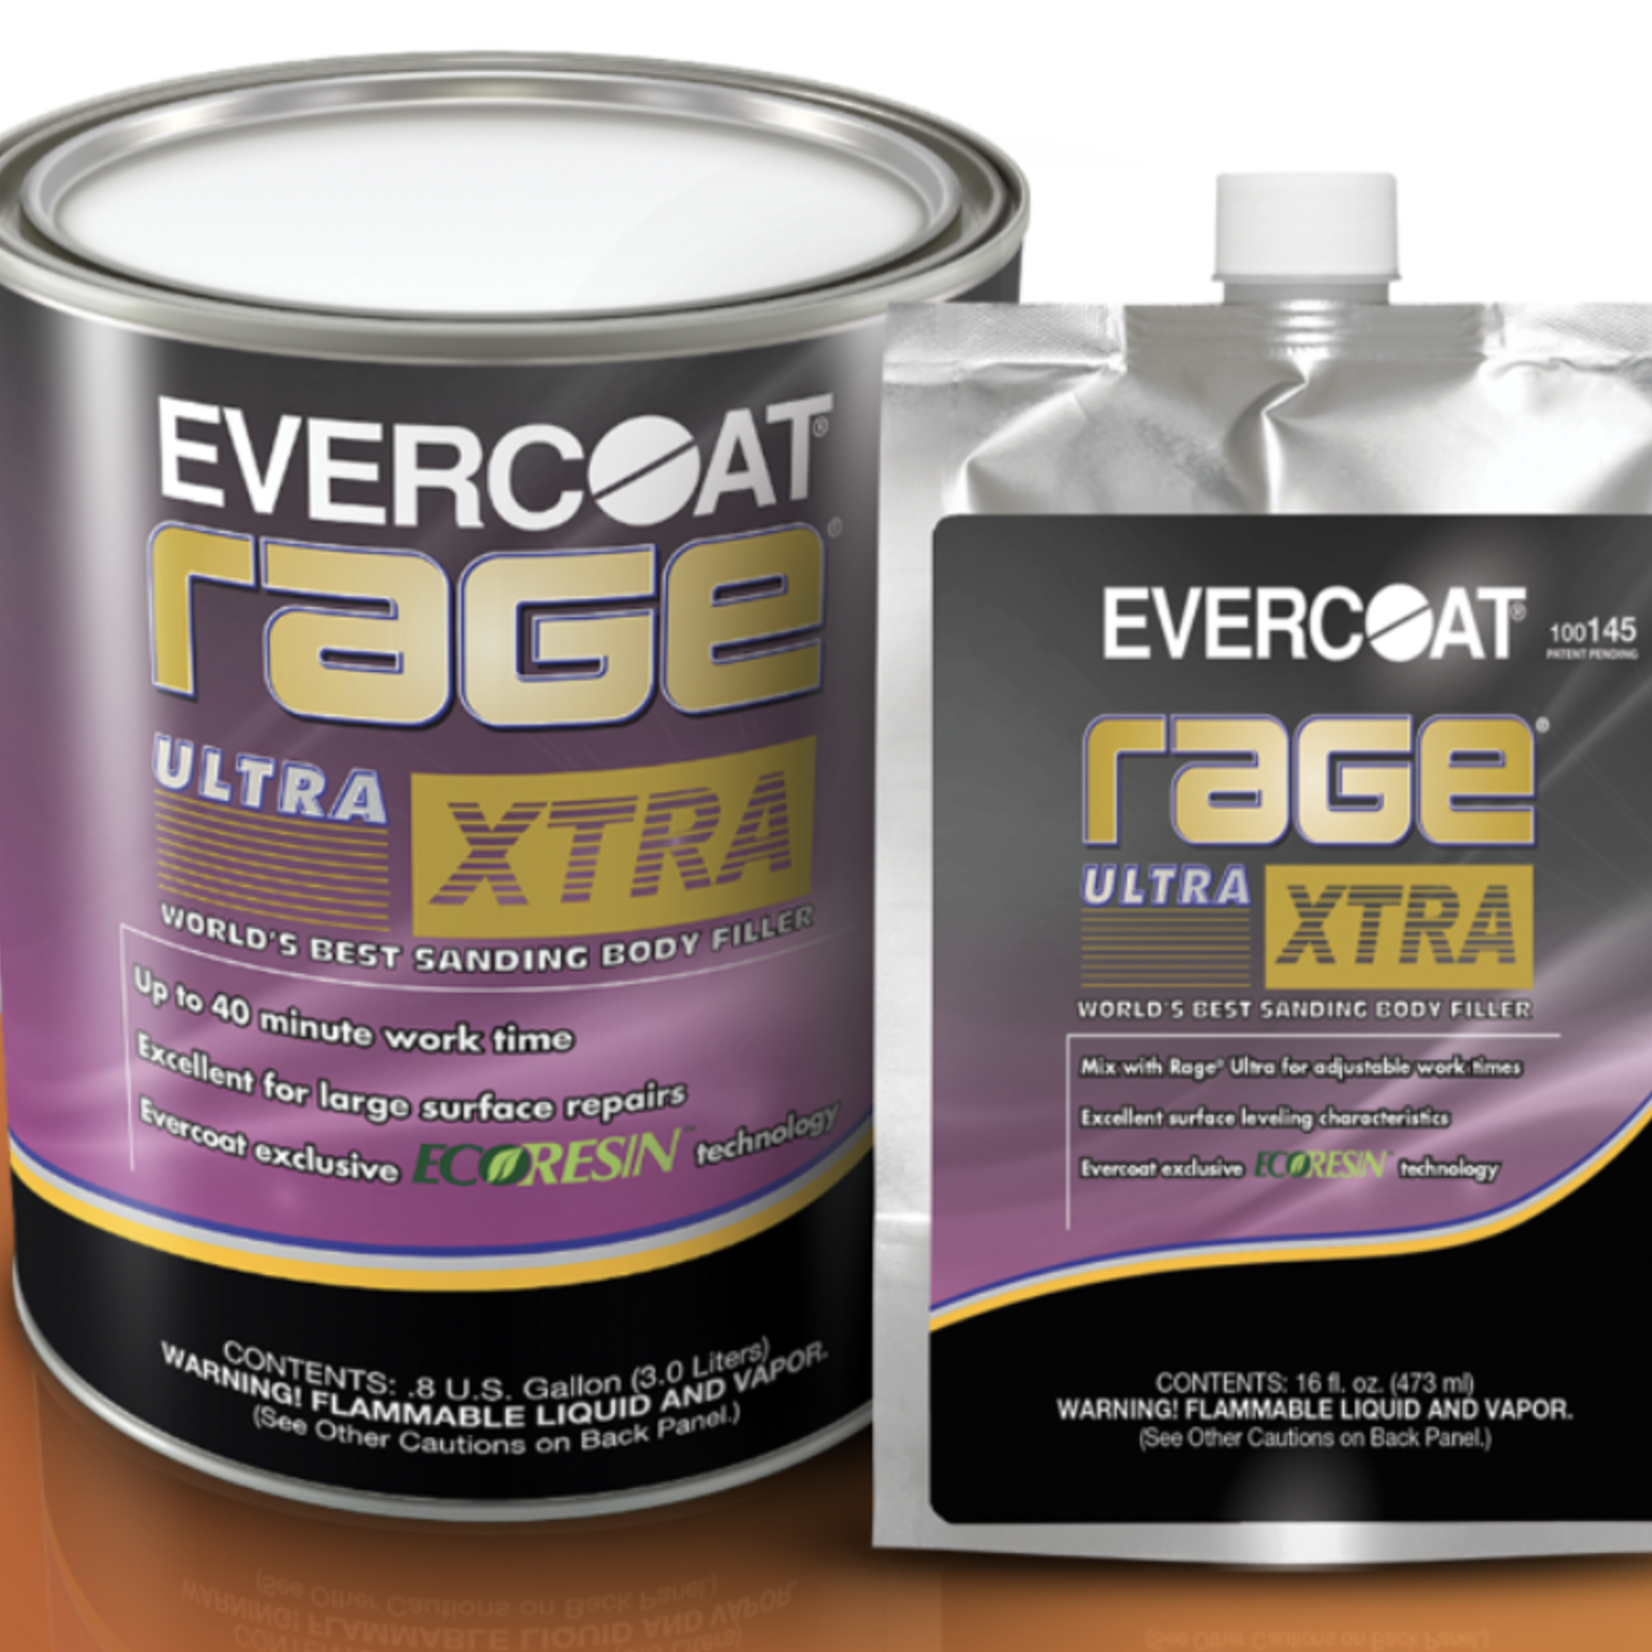 EVERCOAT Evercoat Rage Ultra Xtra